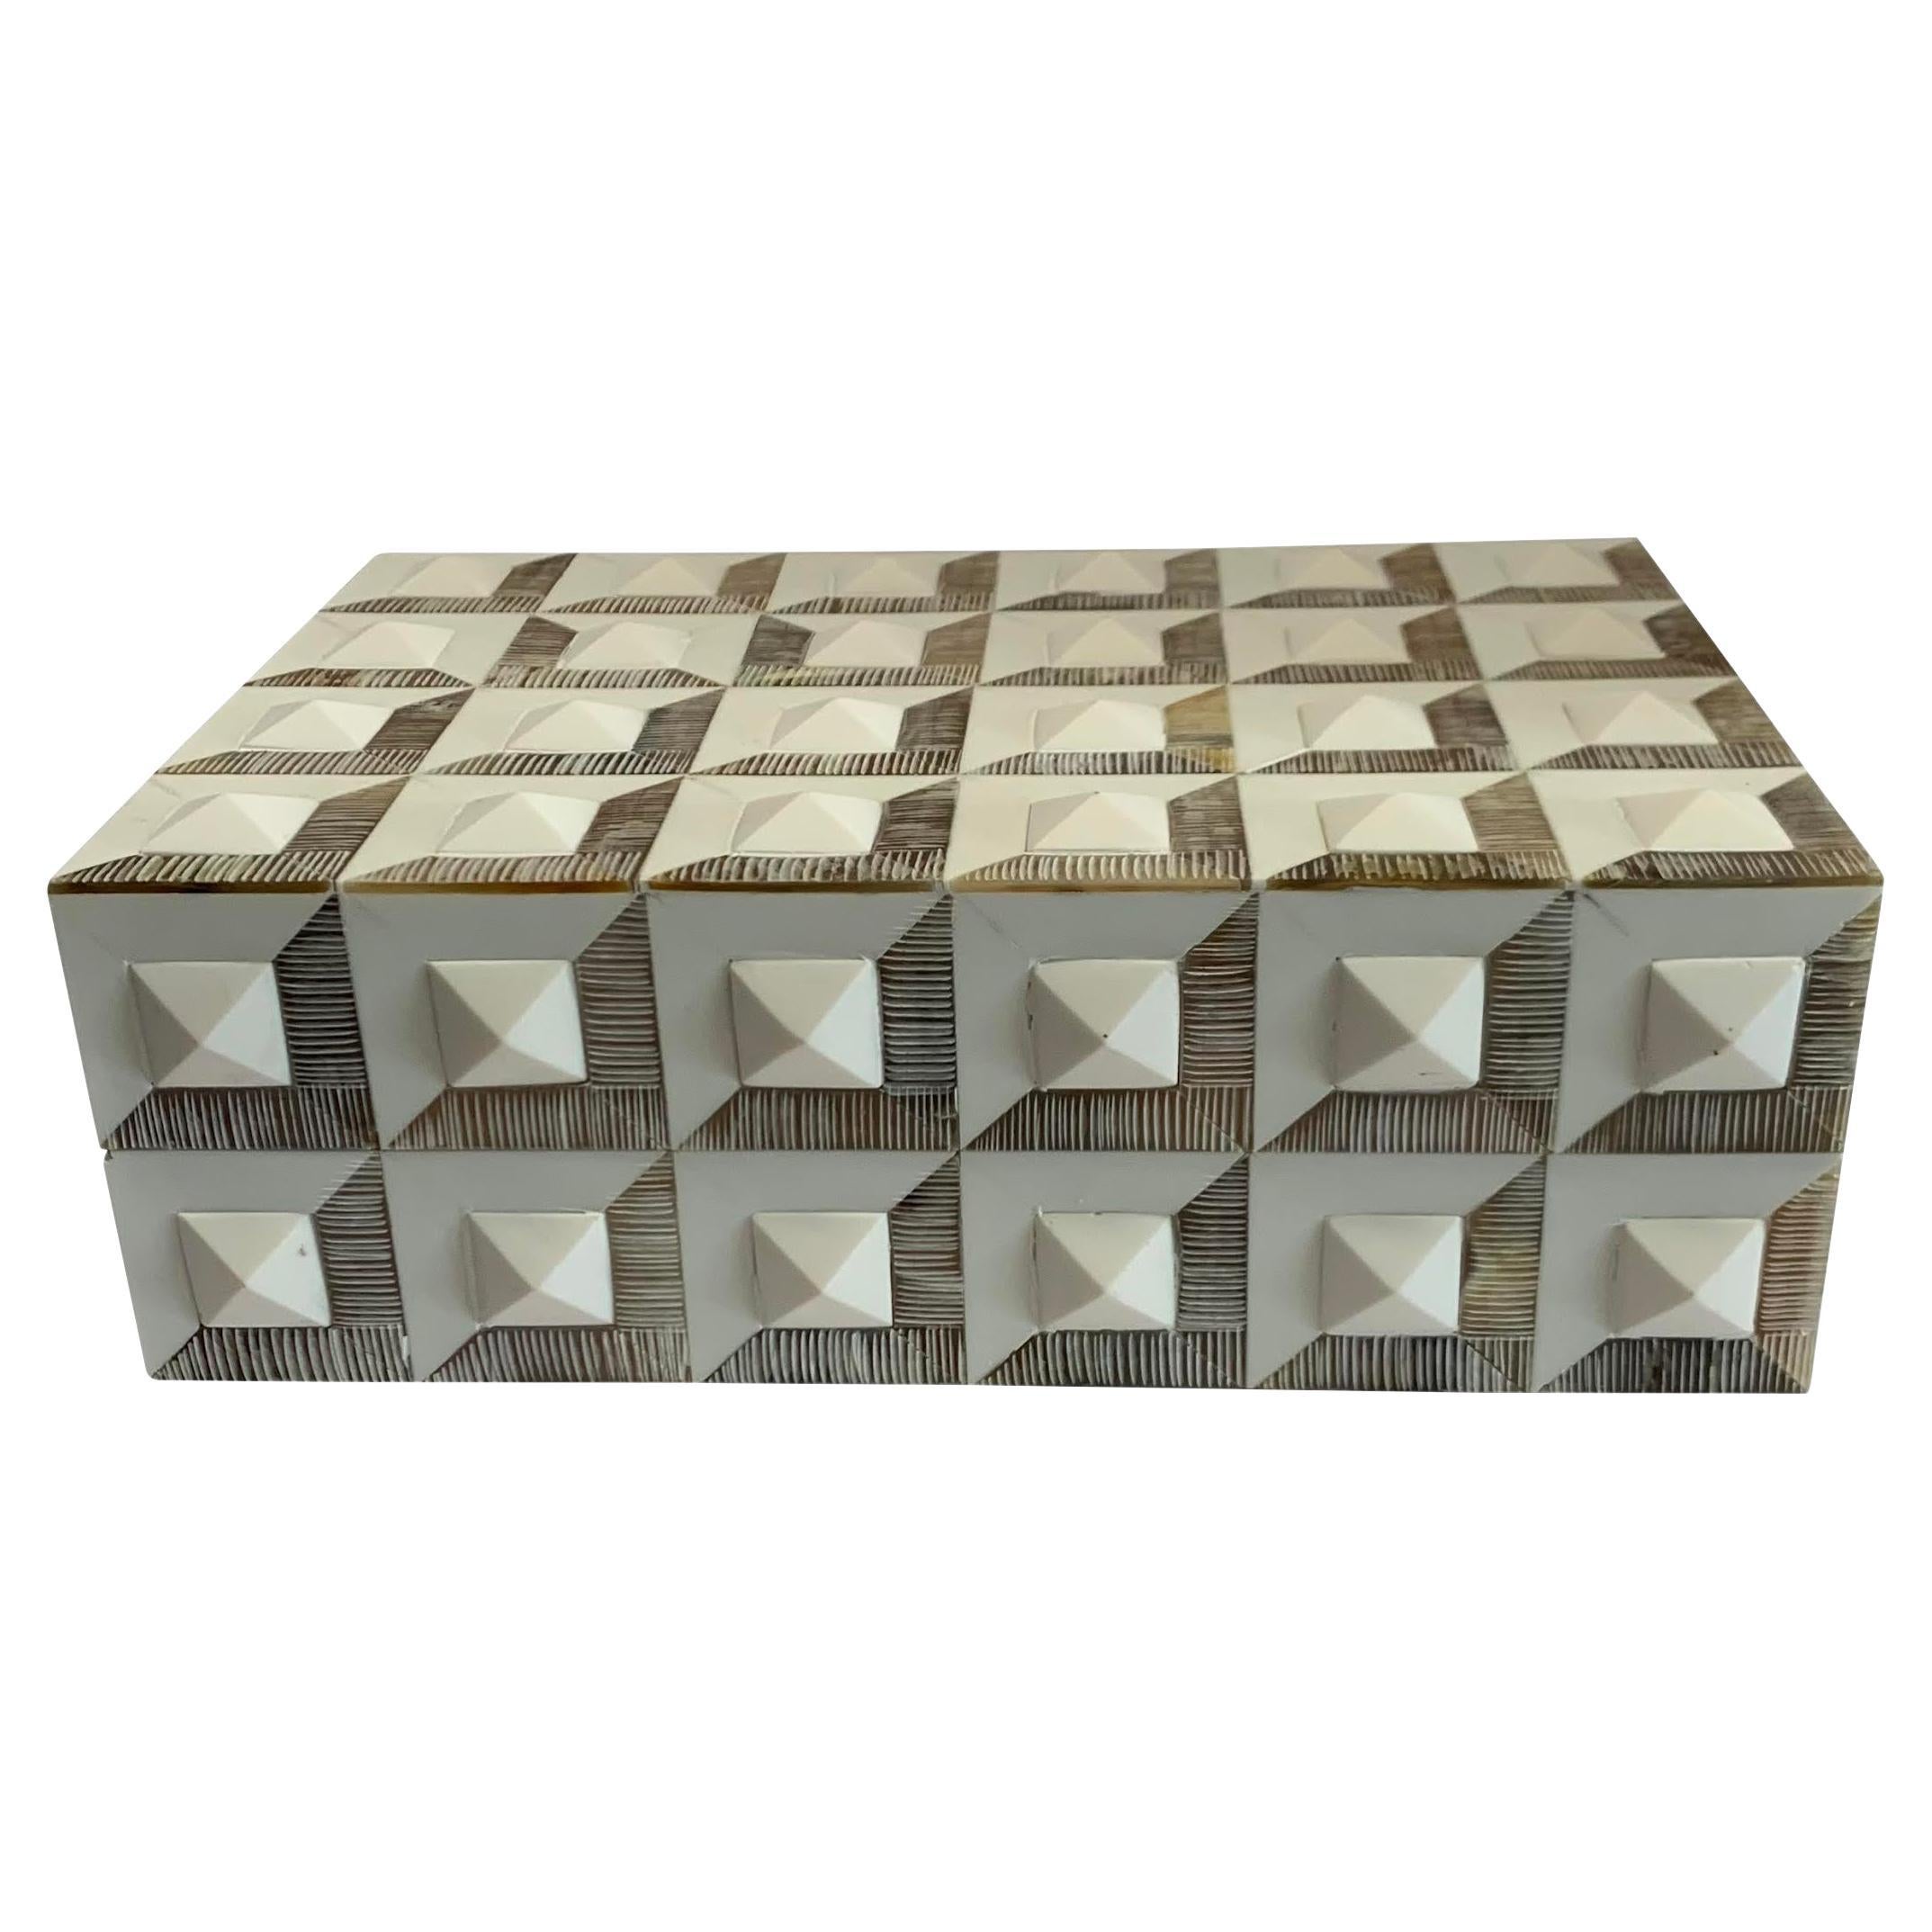 White And Tan Raised Pyramid Geometric Design Bone Box, India, Contemporary For Sale